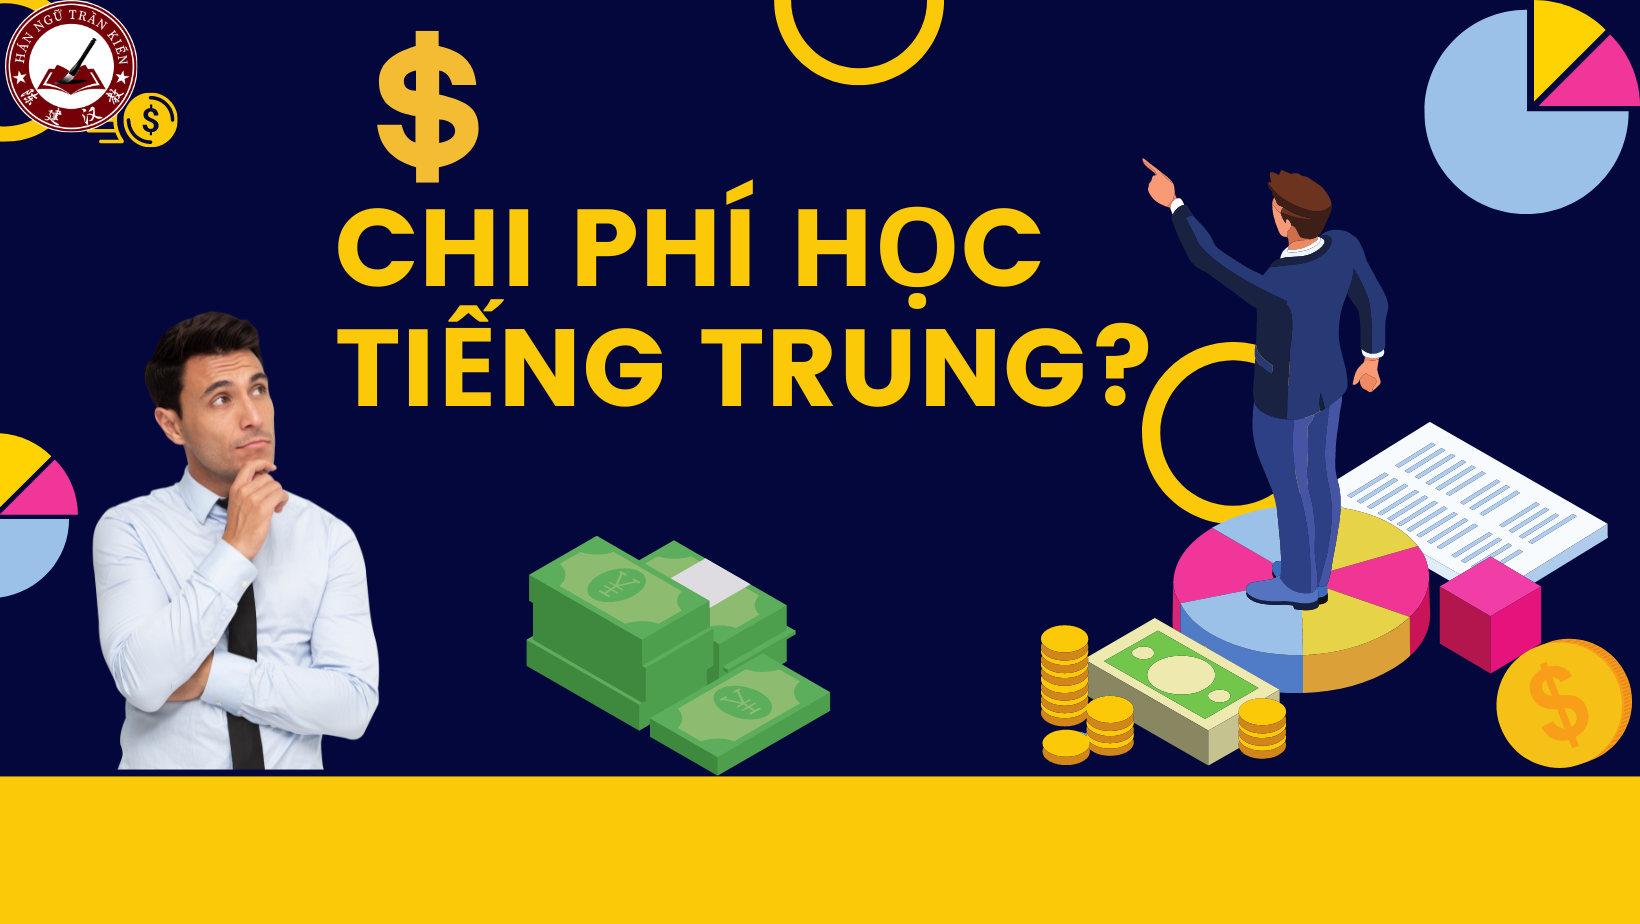 CHI PHI HOC TIENG TRUNG